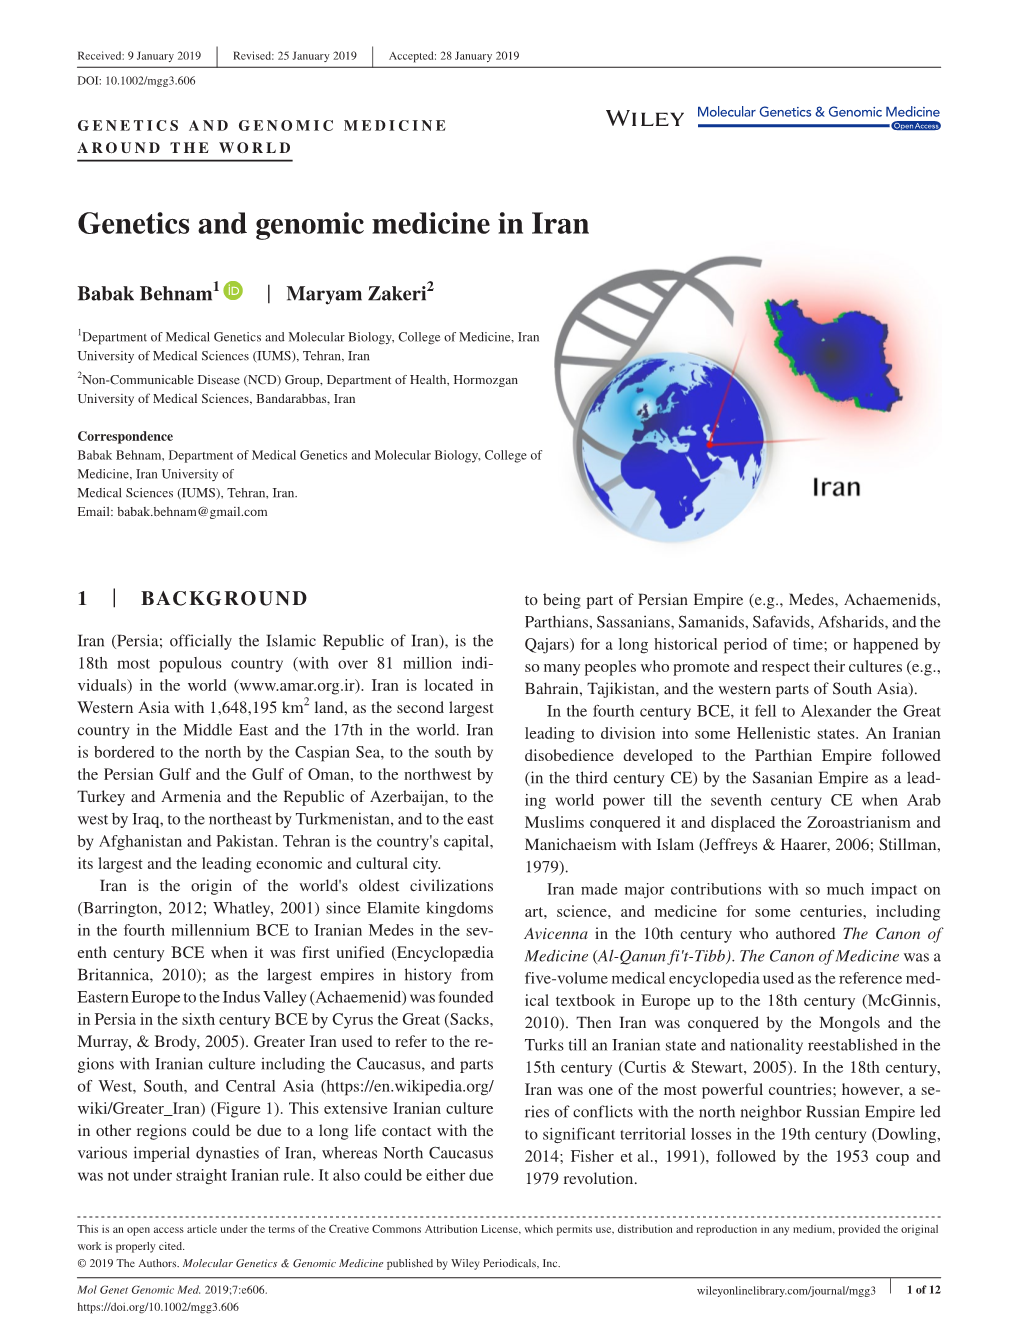 Genetics and Genomic Medicine in Iran